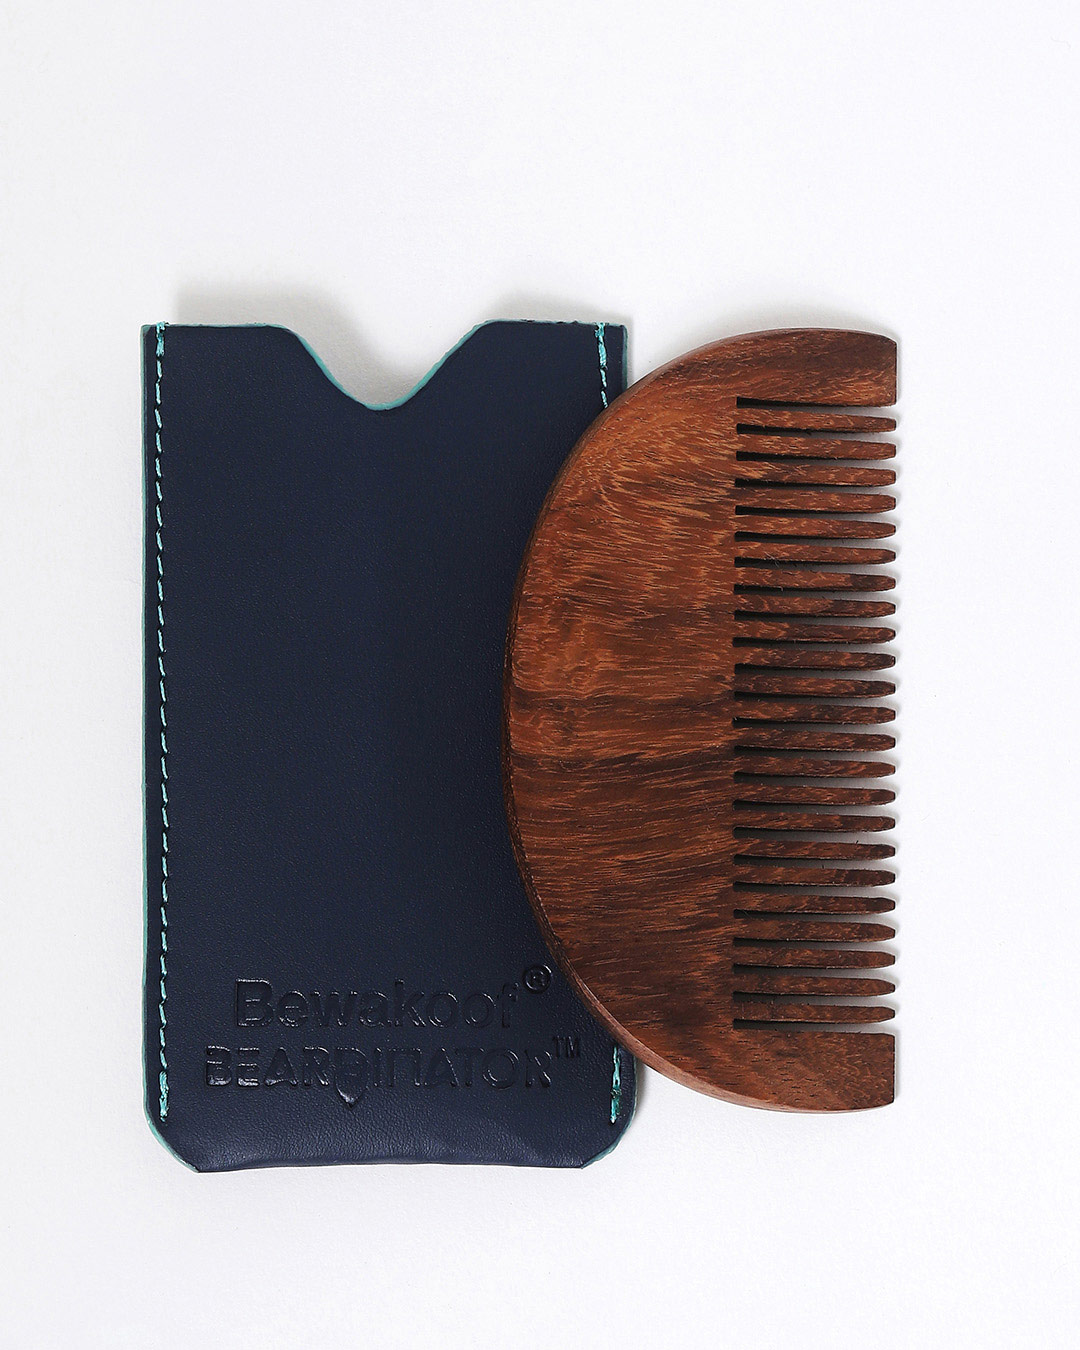 Shop Beardinator Beard Comb-Back